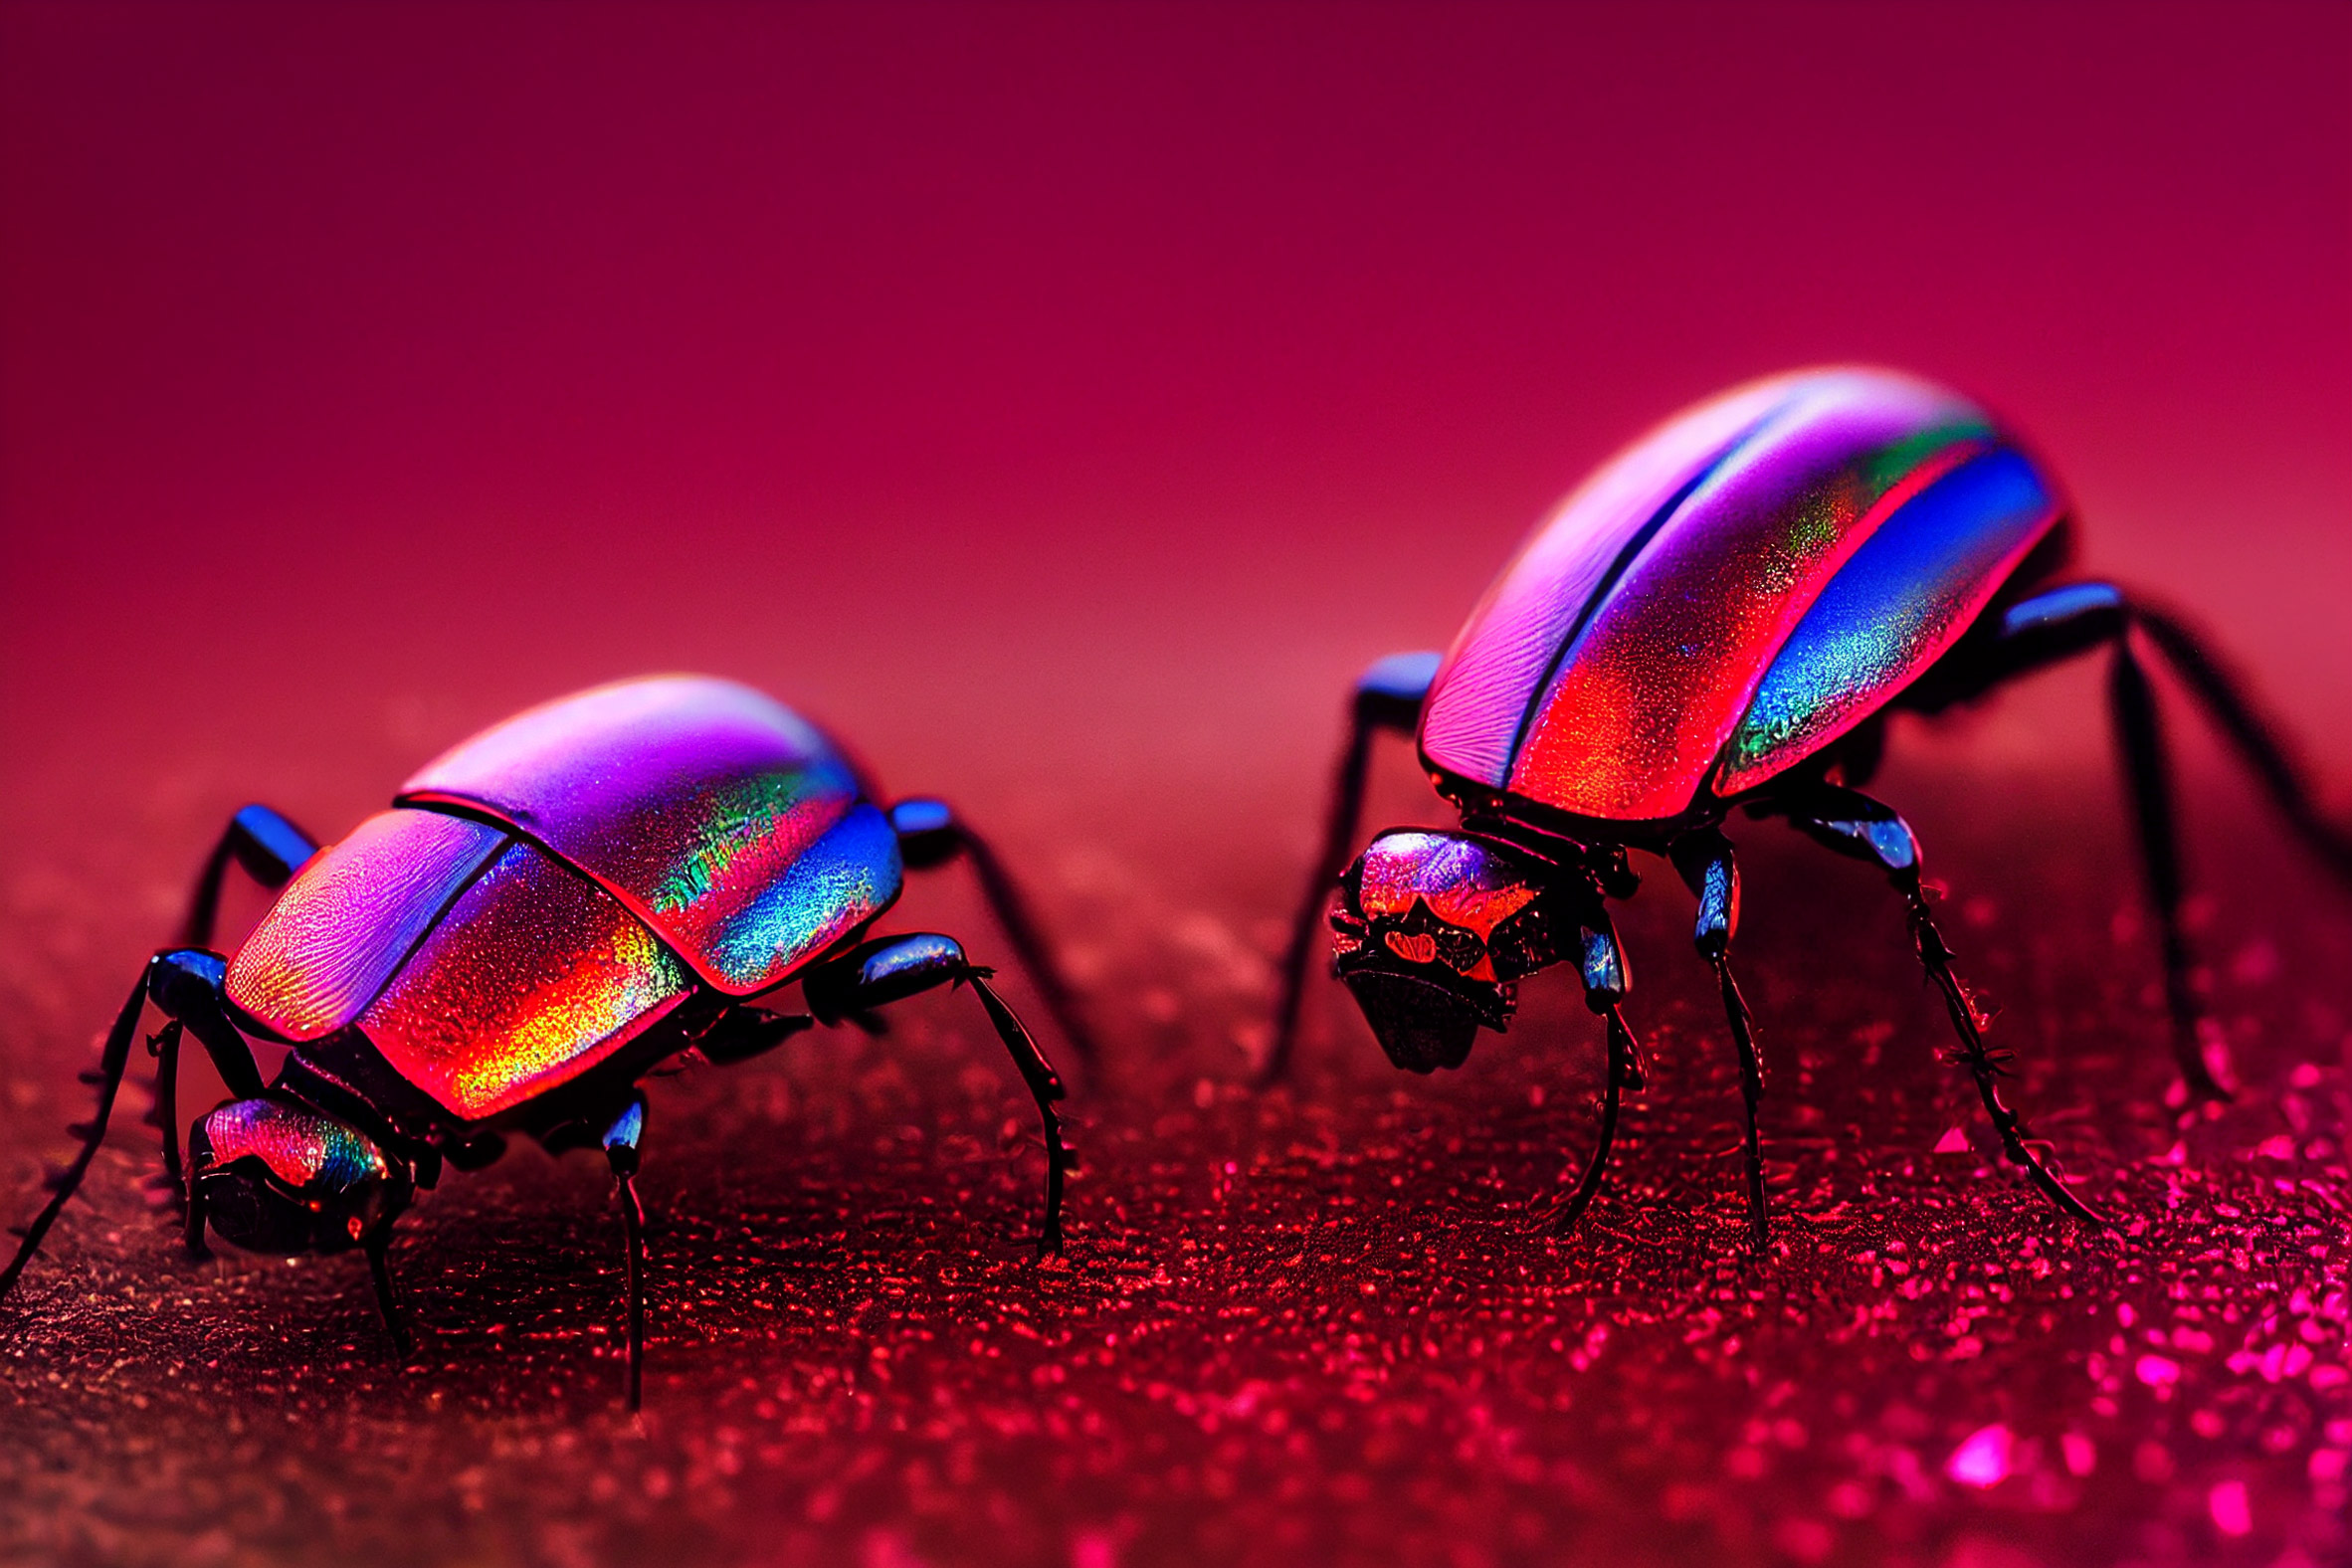 Two pink shiny beetles